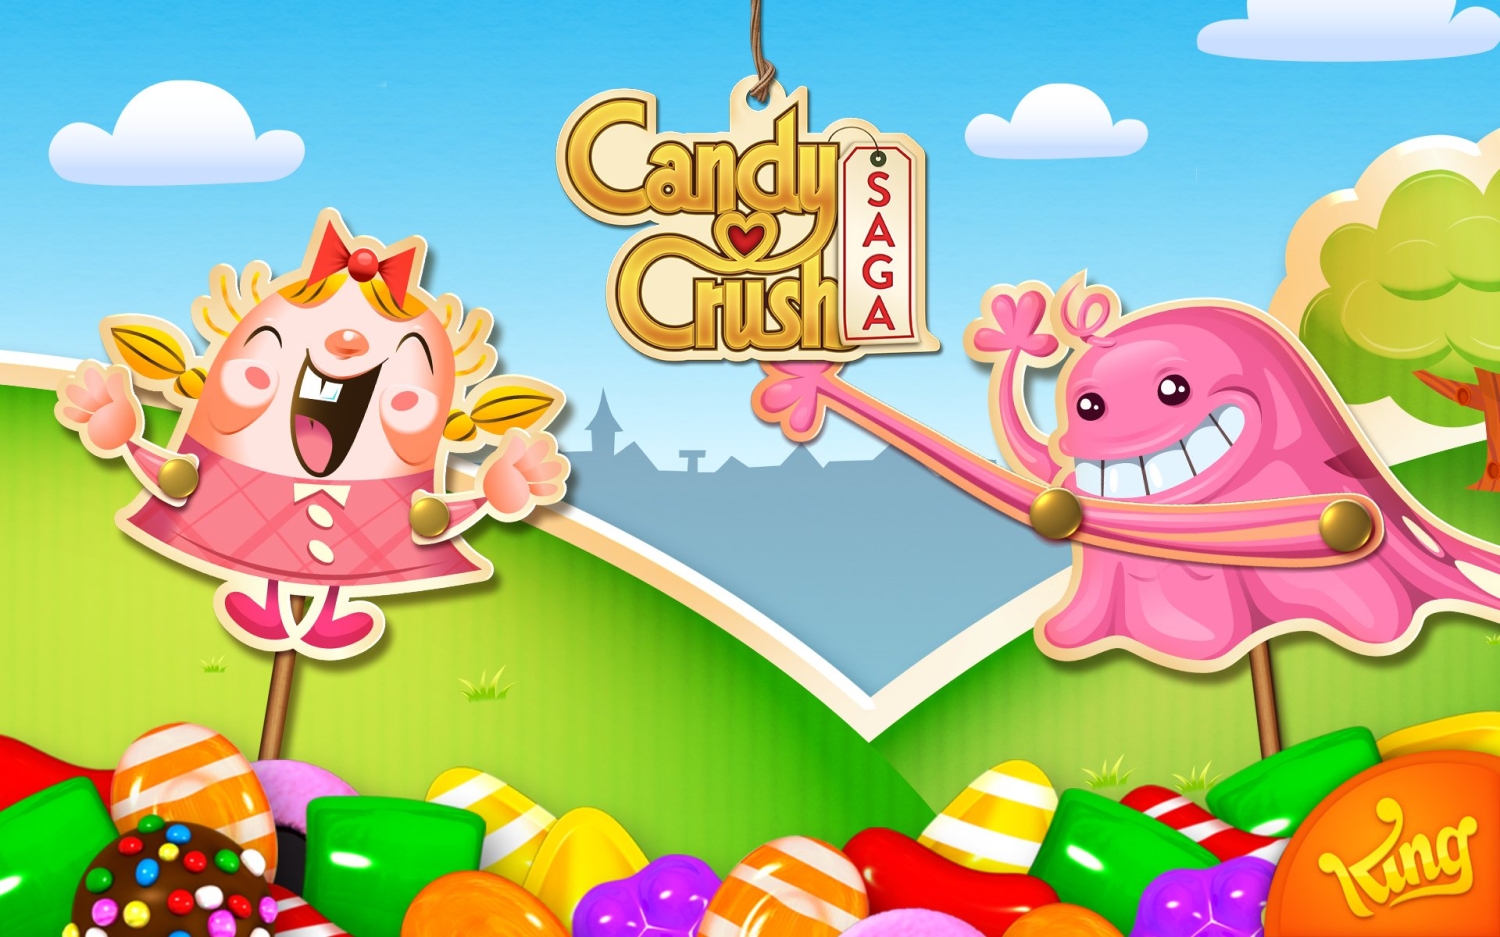 Candy Crush studio shuts down five online games - Polygon